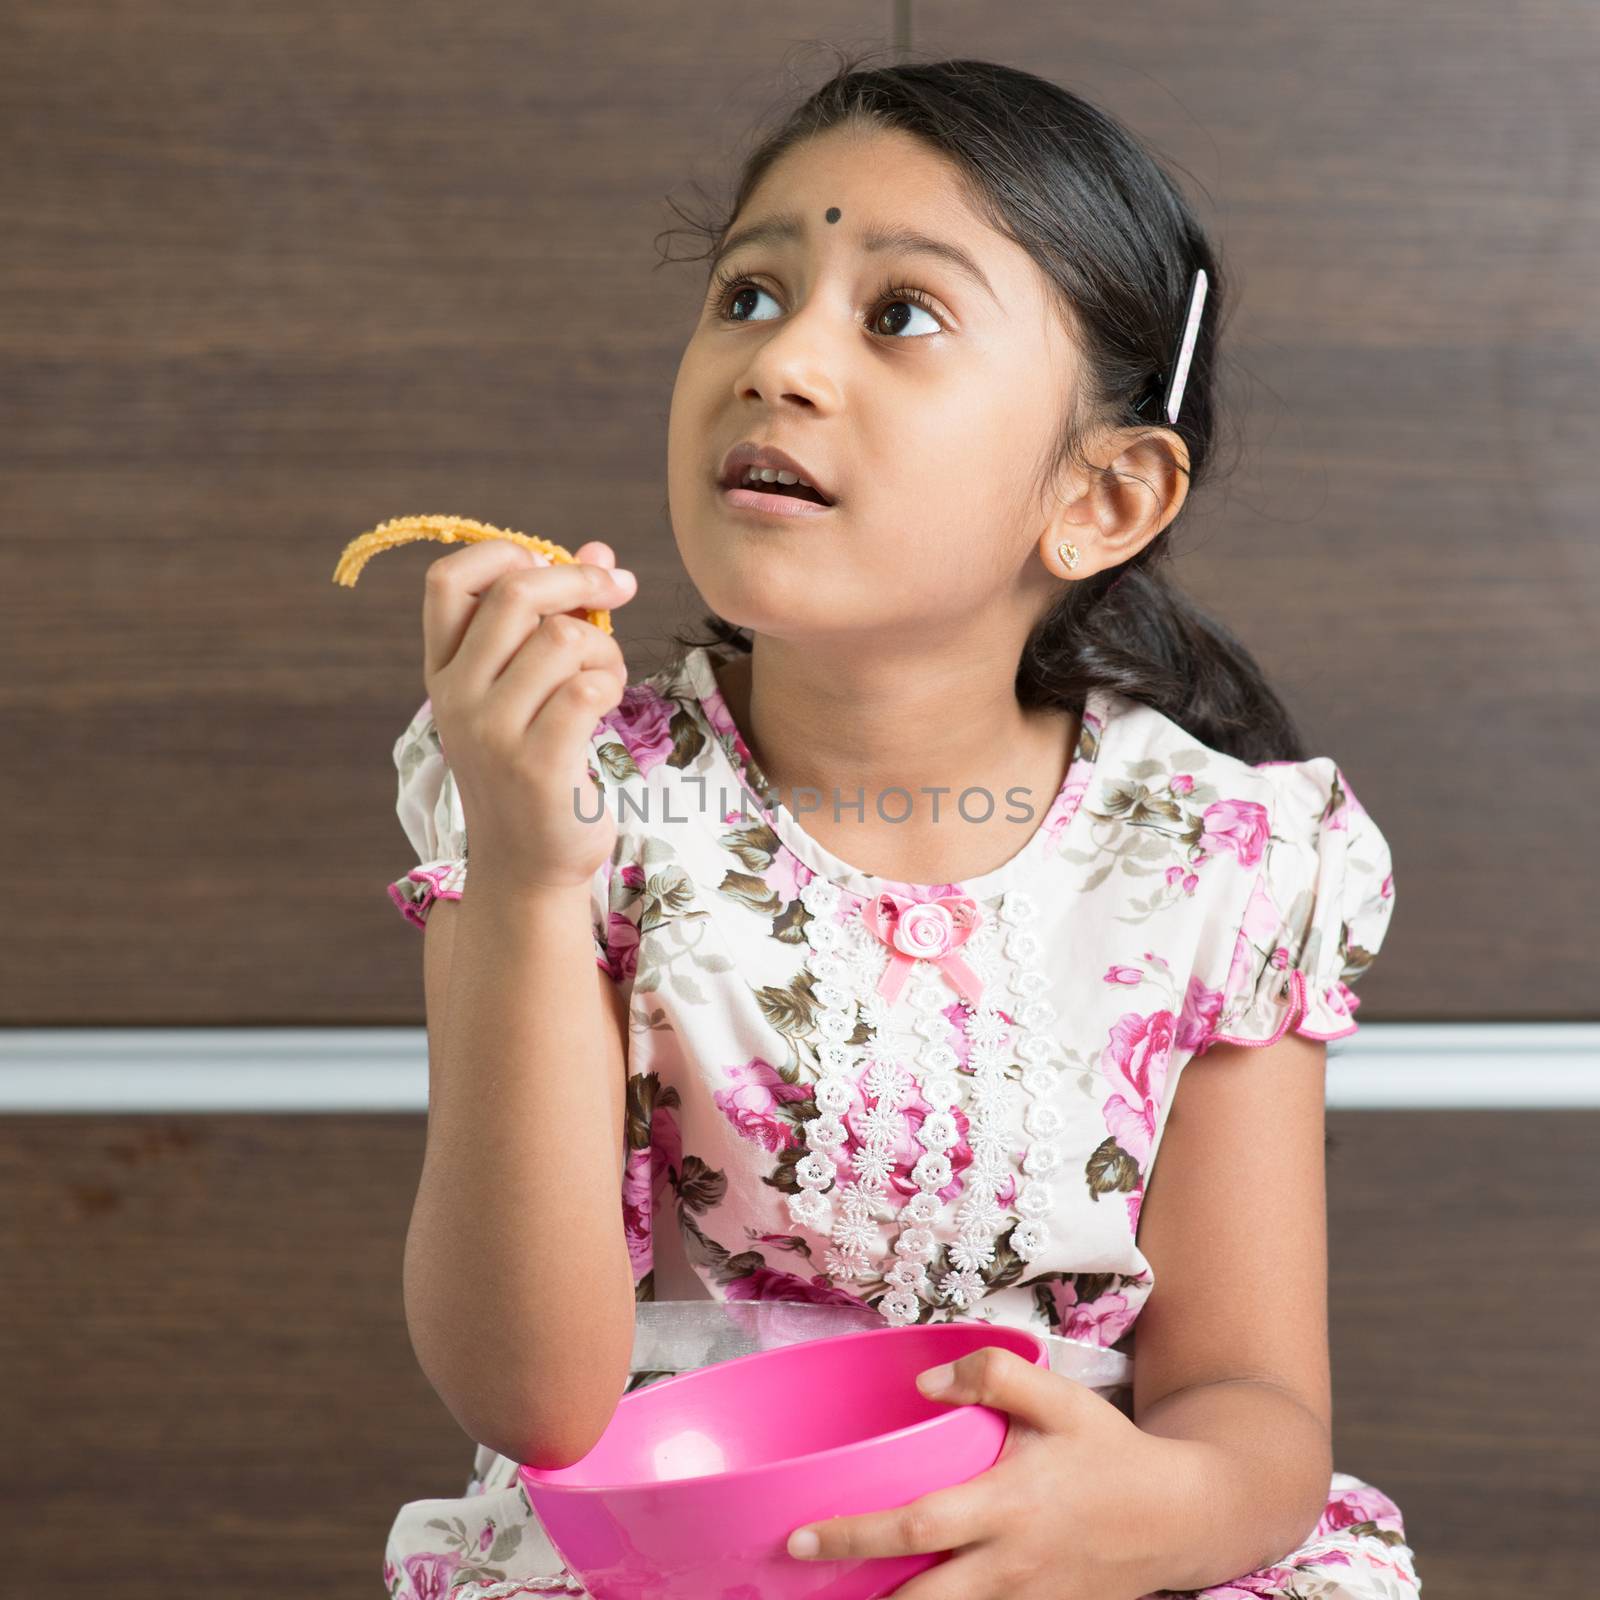 Cute Indian girl eating traditional snack murukku. Asian child enjoying food, living lifestyle at home.